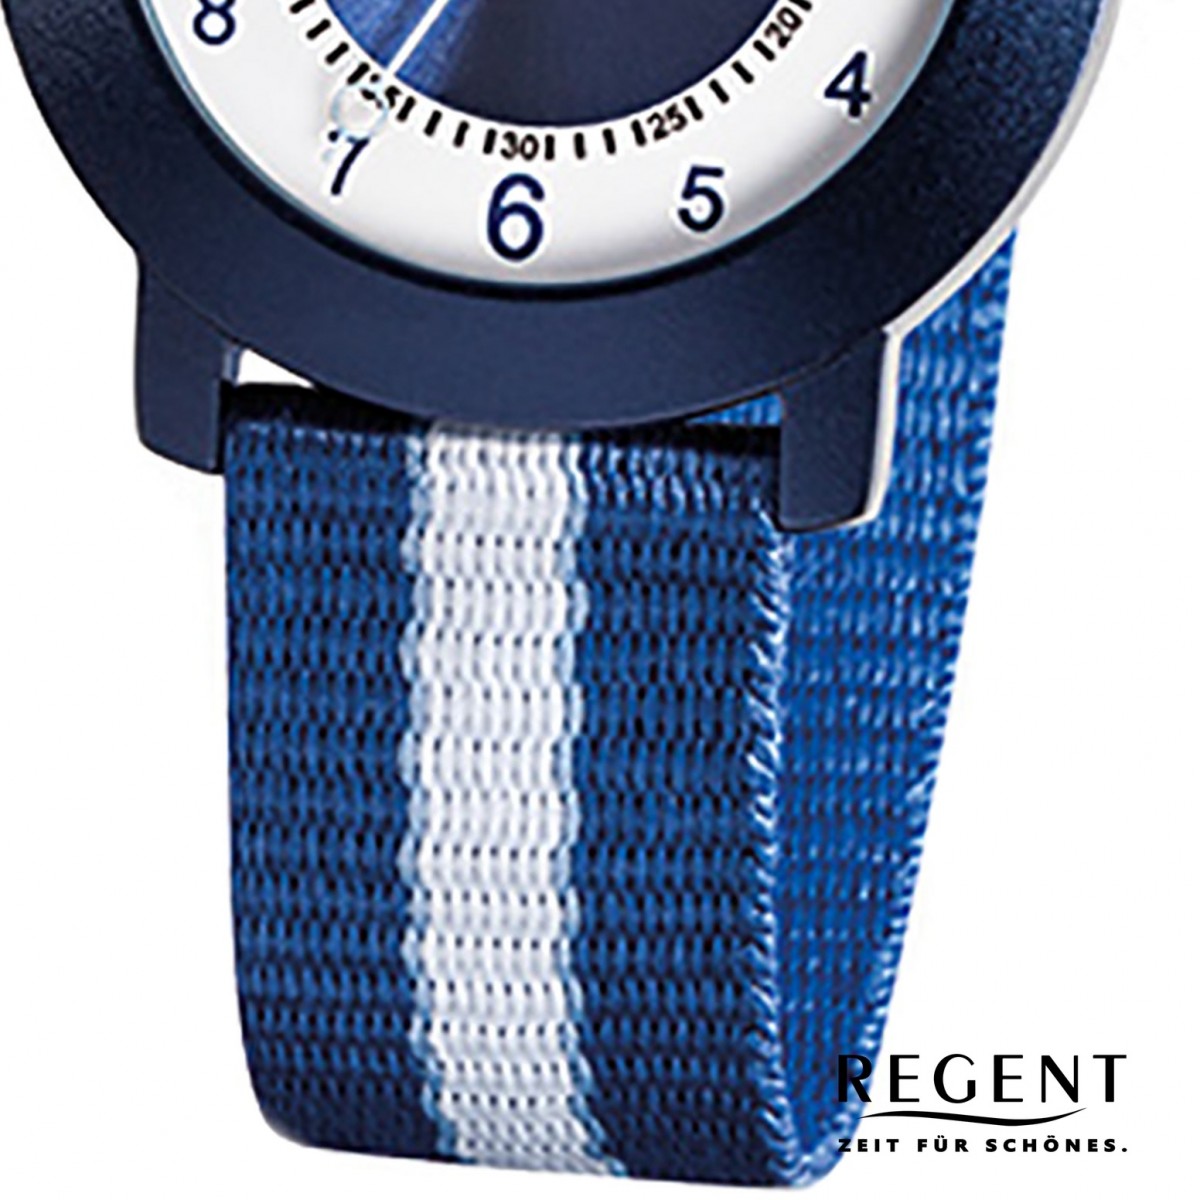 Regent Aluminium Kinder-Armbanduhr Uhr Textil Jungen Quarz URF726 weiß blau